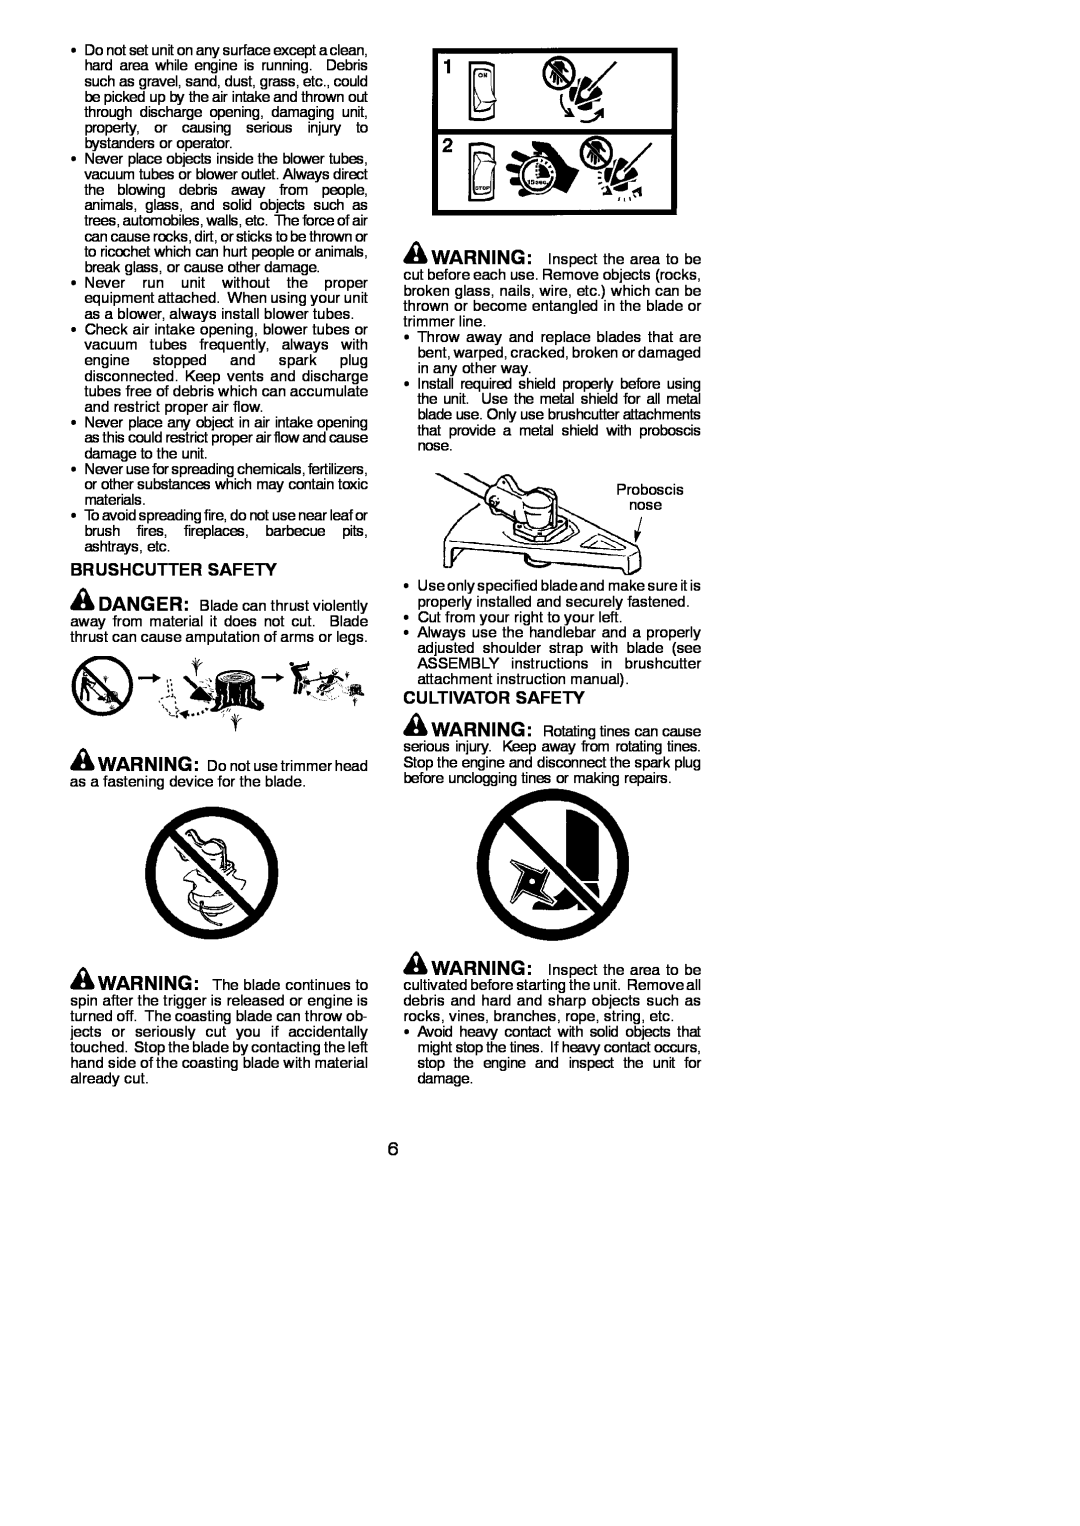 Poulan 545177328 instruction manual Brushcutter Safety, Cultivator Safety 